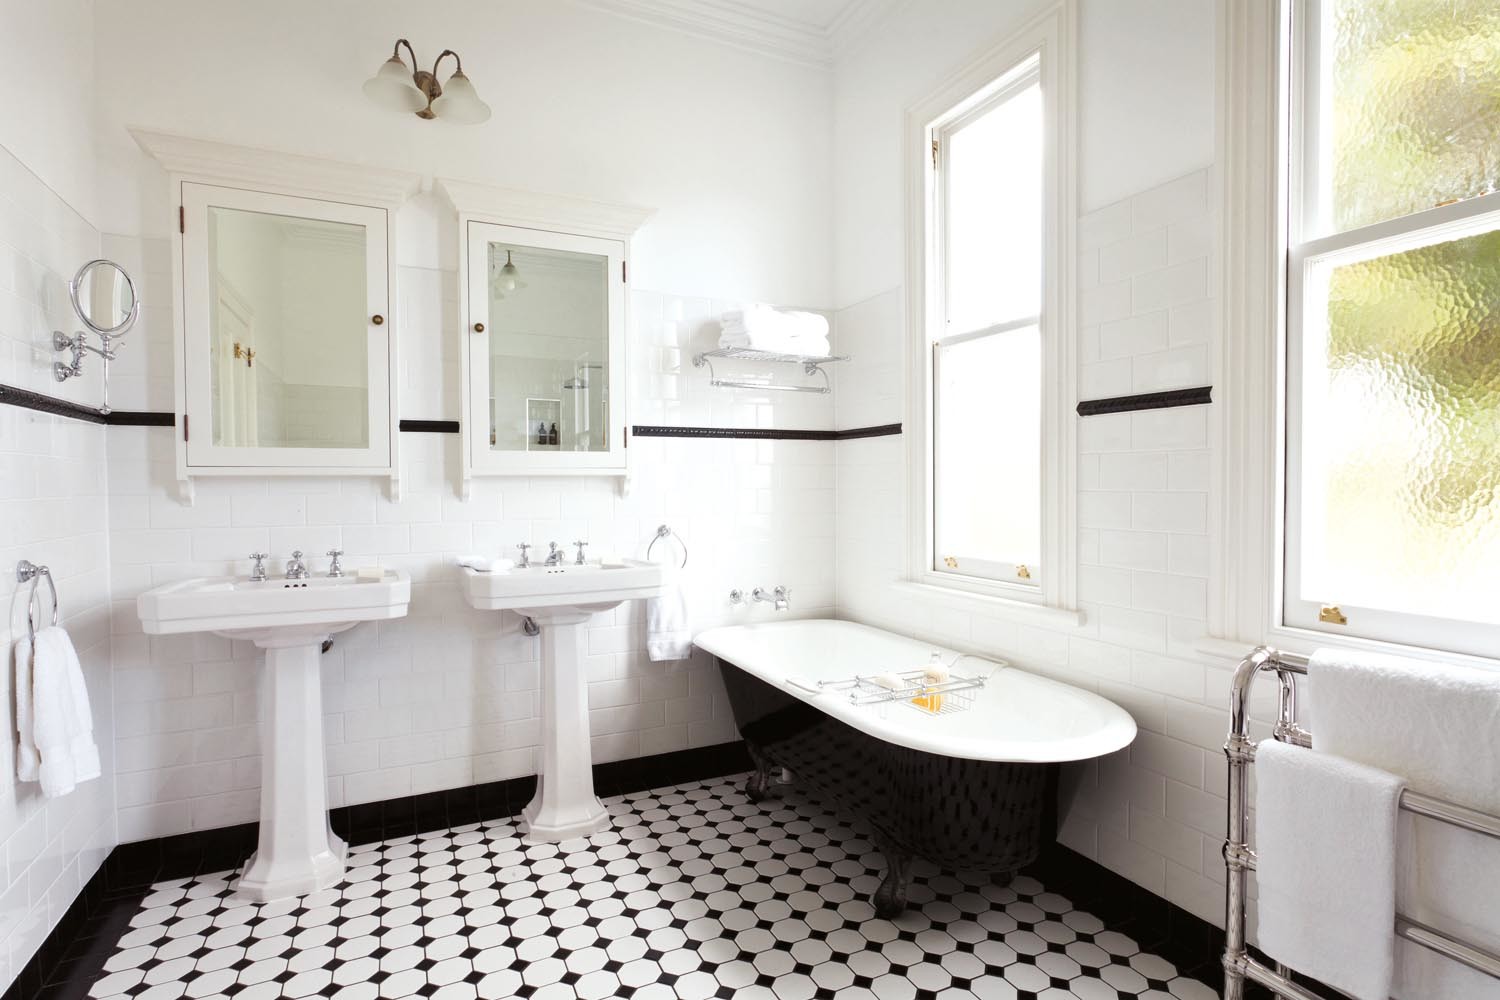 1920s Style Bathrooms That Inspire Rue, Black 038 White Tile Designs Bathroom